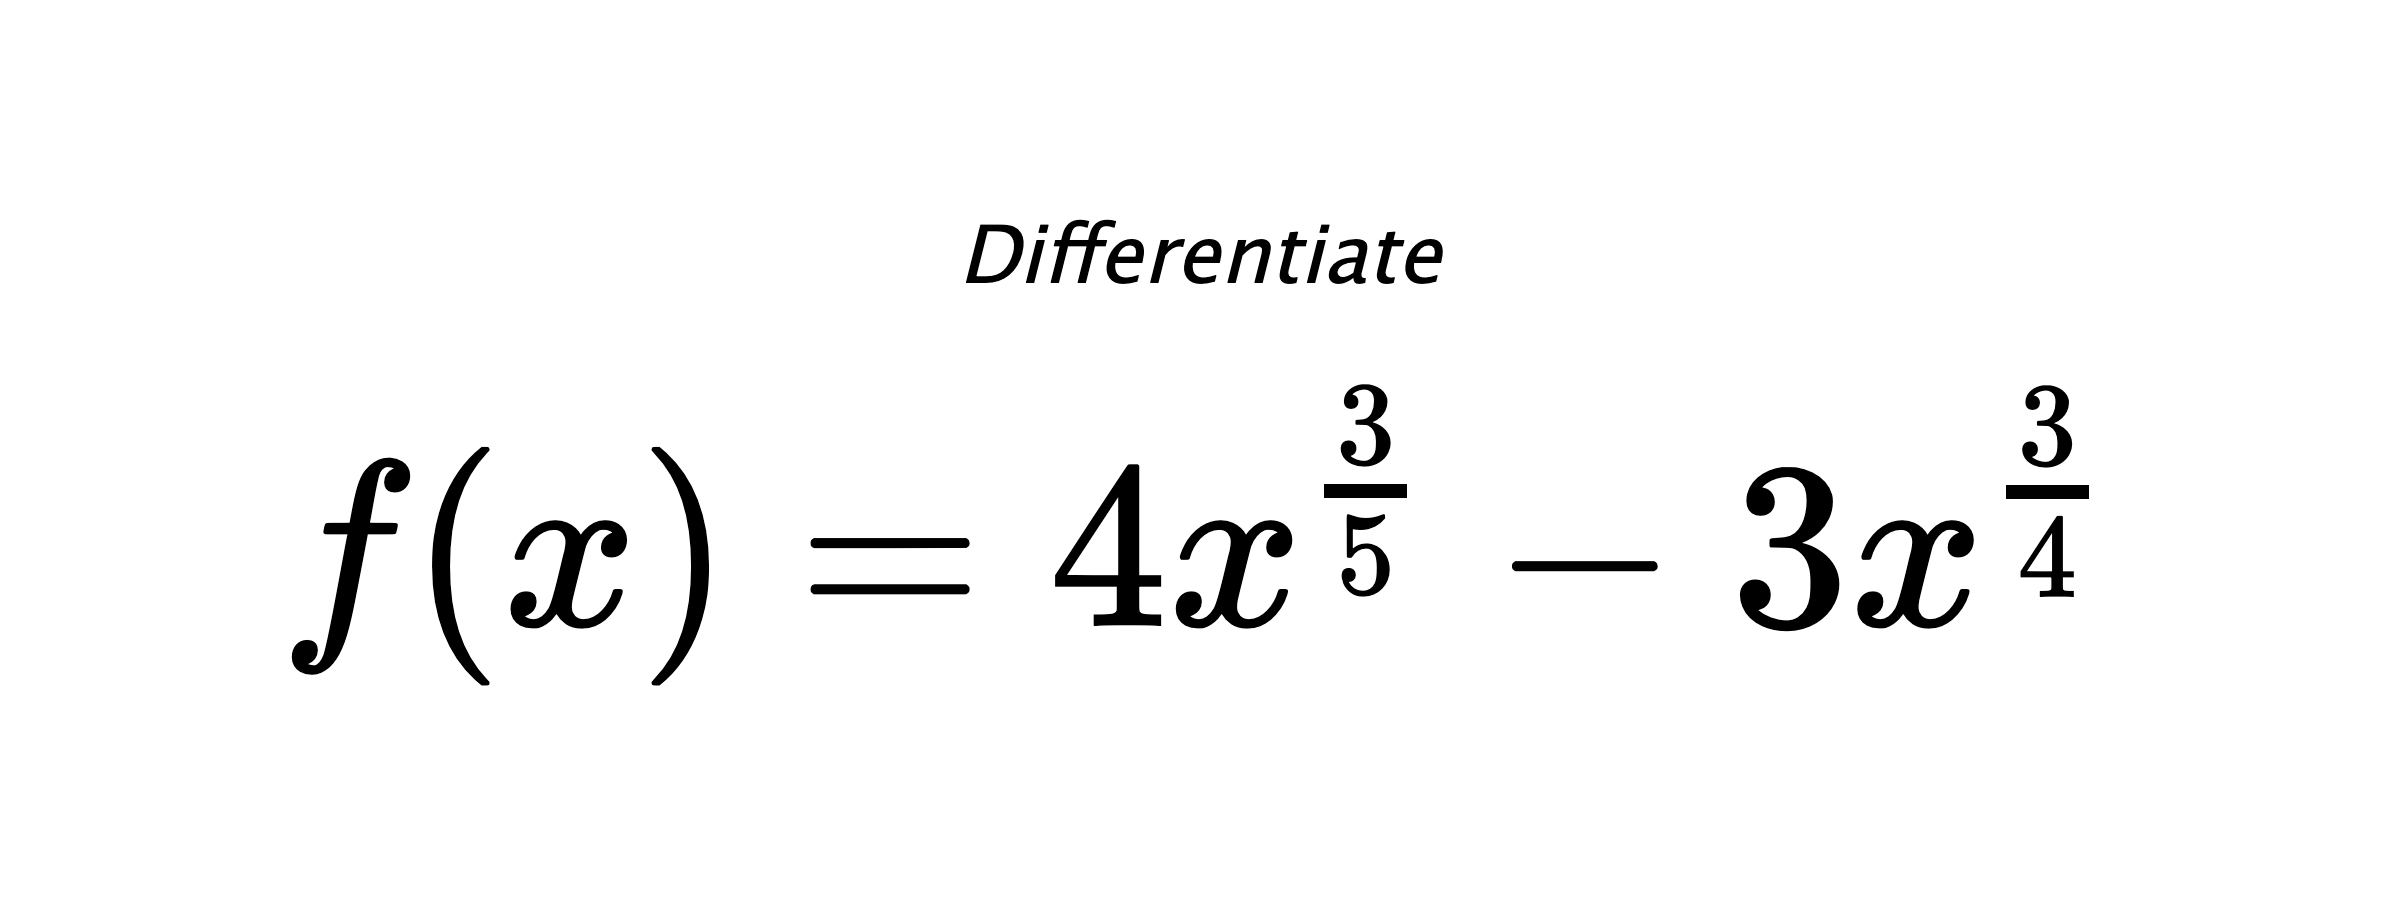 Differentiate $ f(x) = 4 x^{\frac{3}{5}} - 3 x^{\frac{3}{4}} $